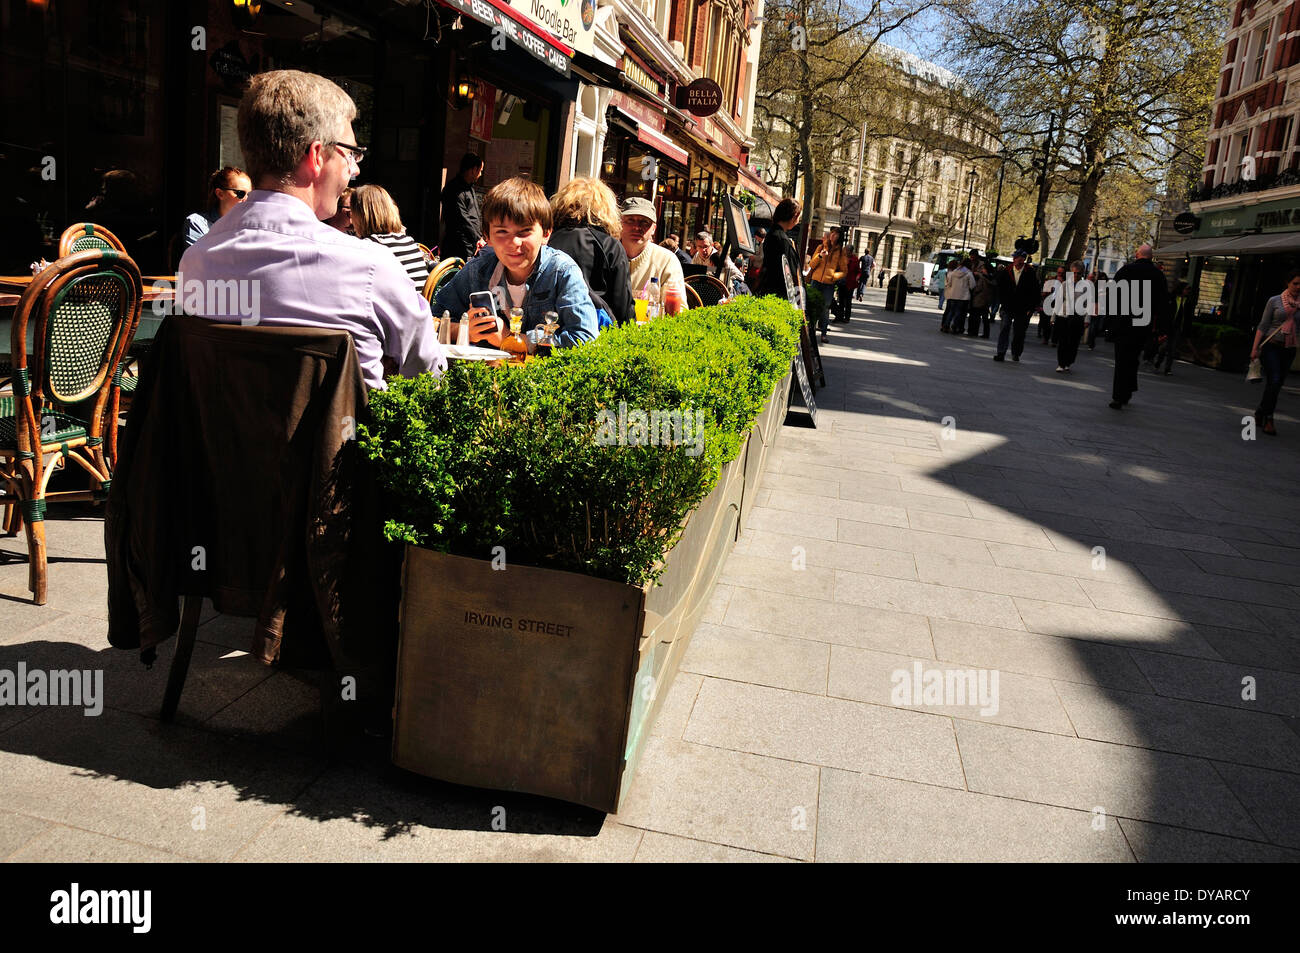 London, England, UK. People eating outside - young boy on mobile phone Stock Photo